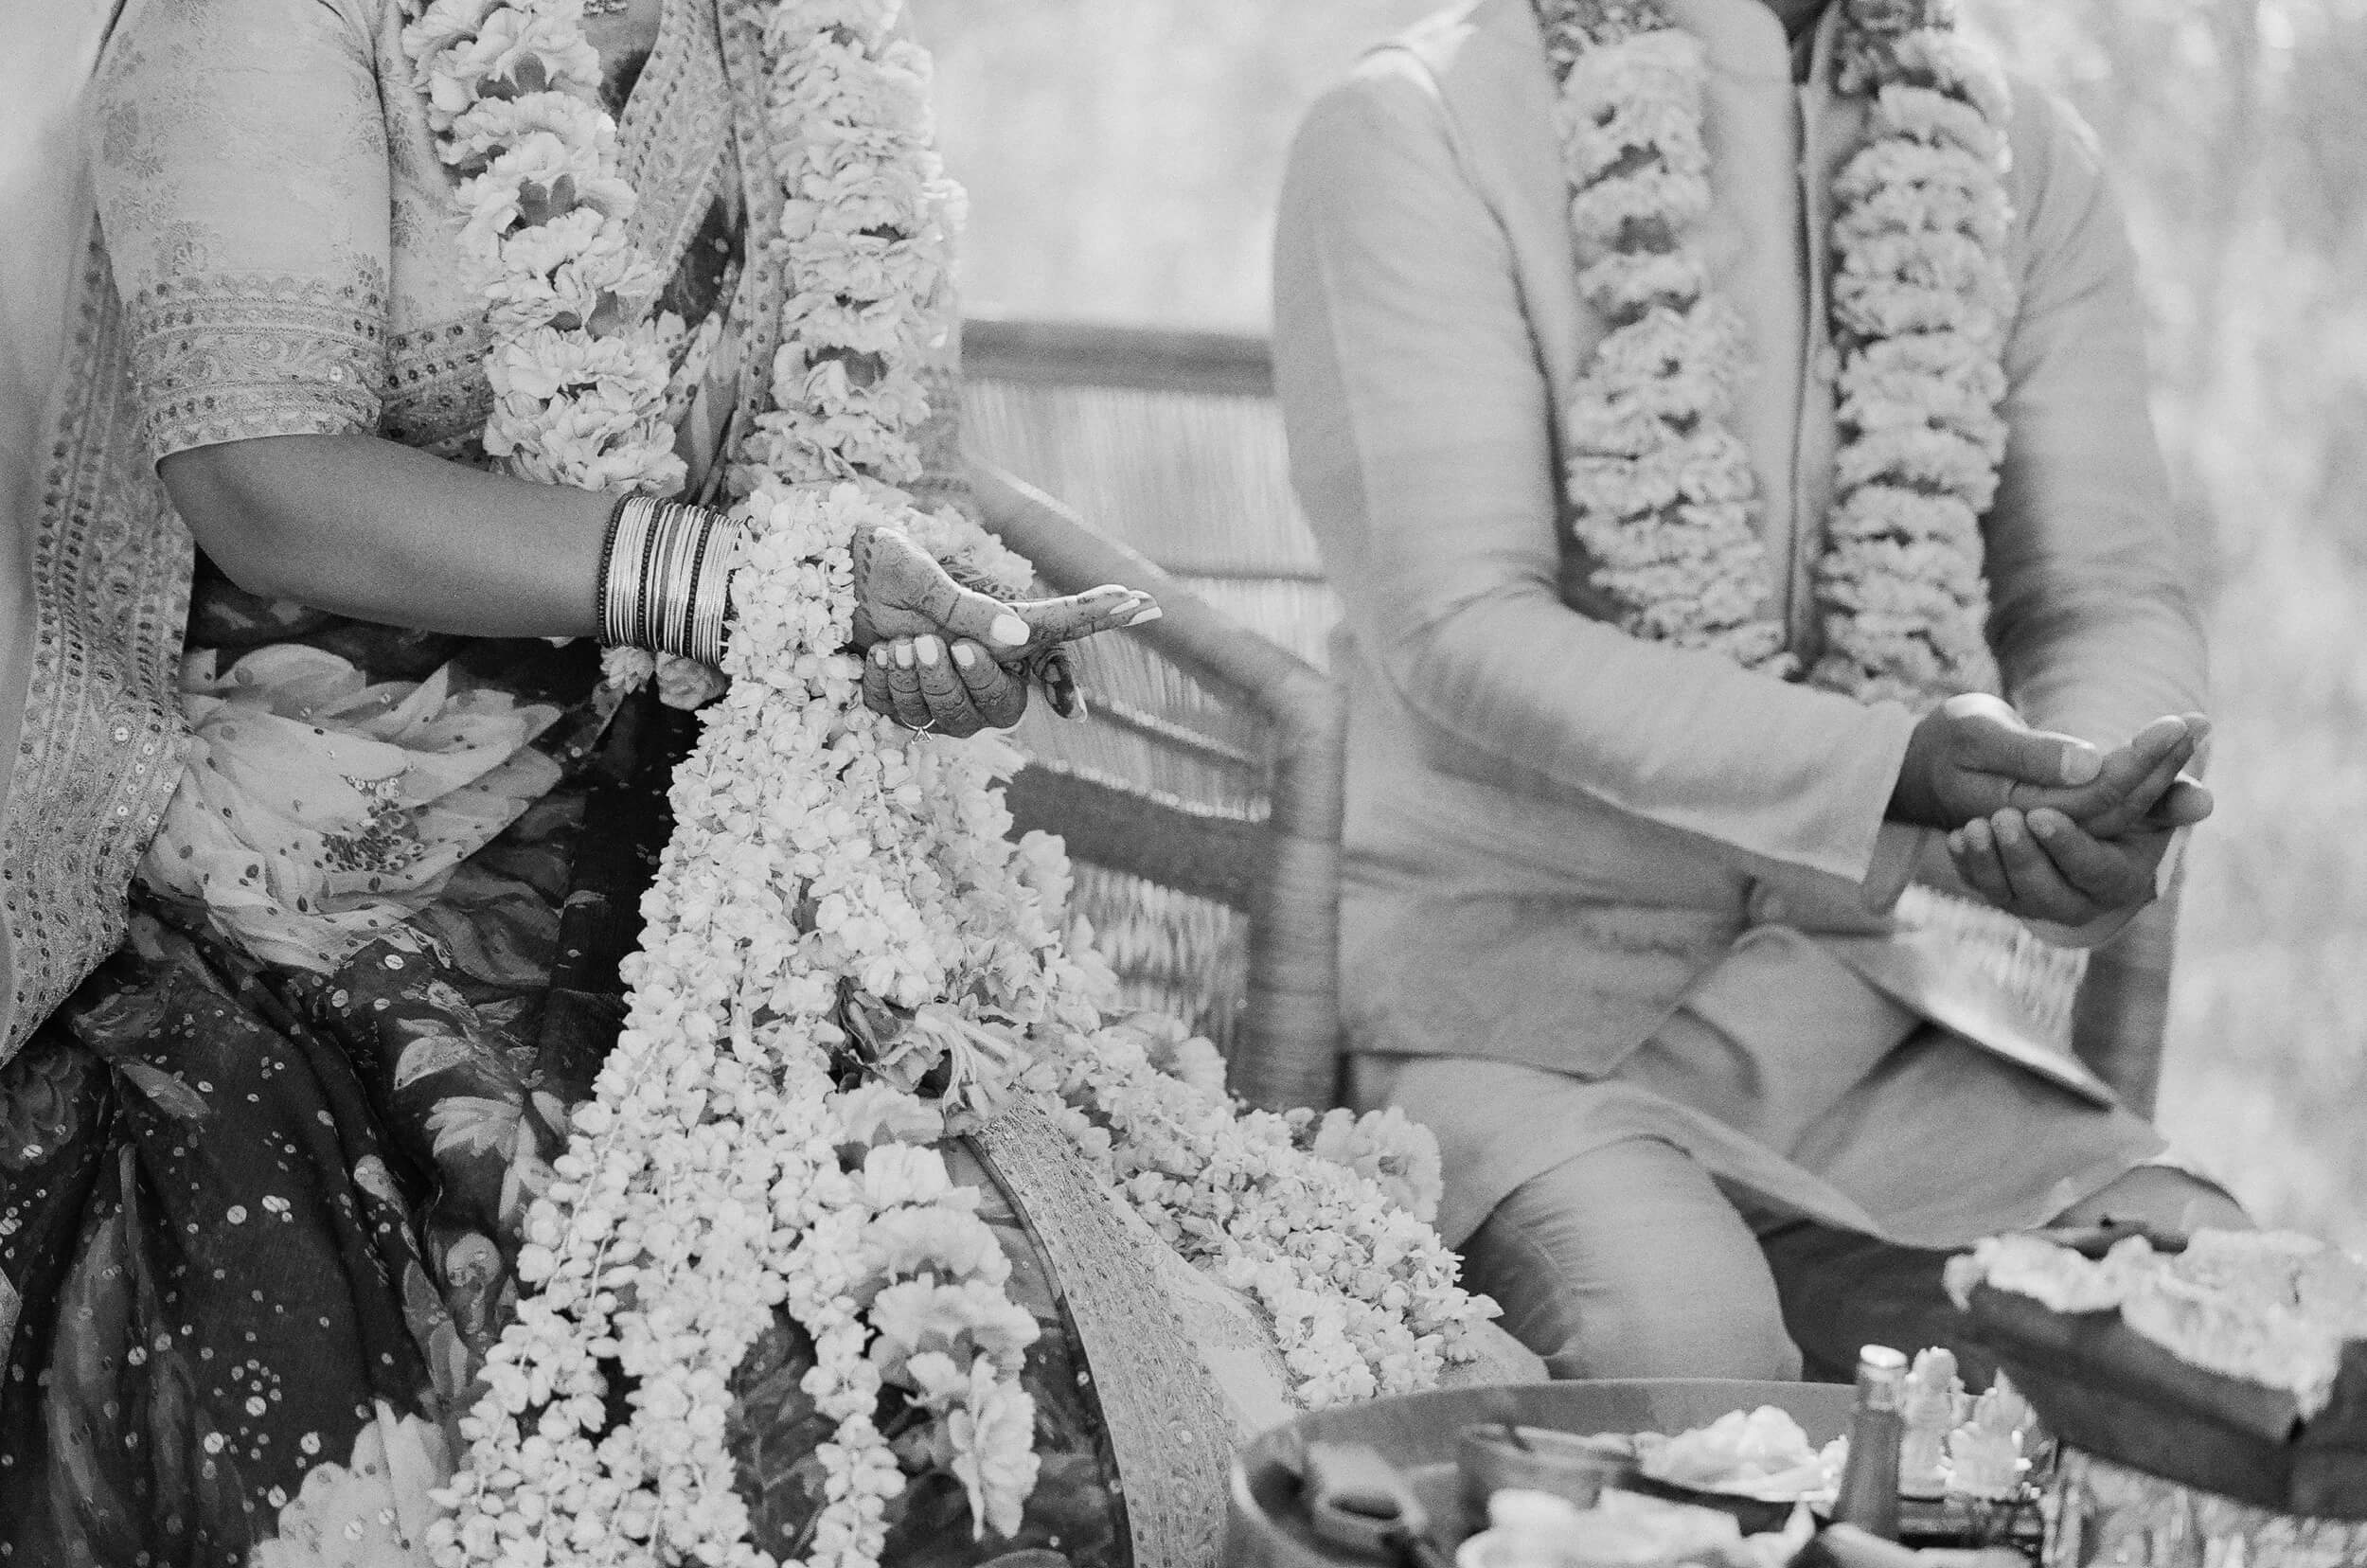 Jai mala ceremony: an Indian wedding tradition